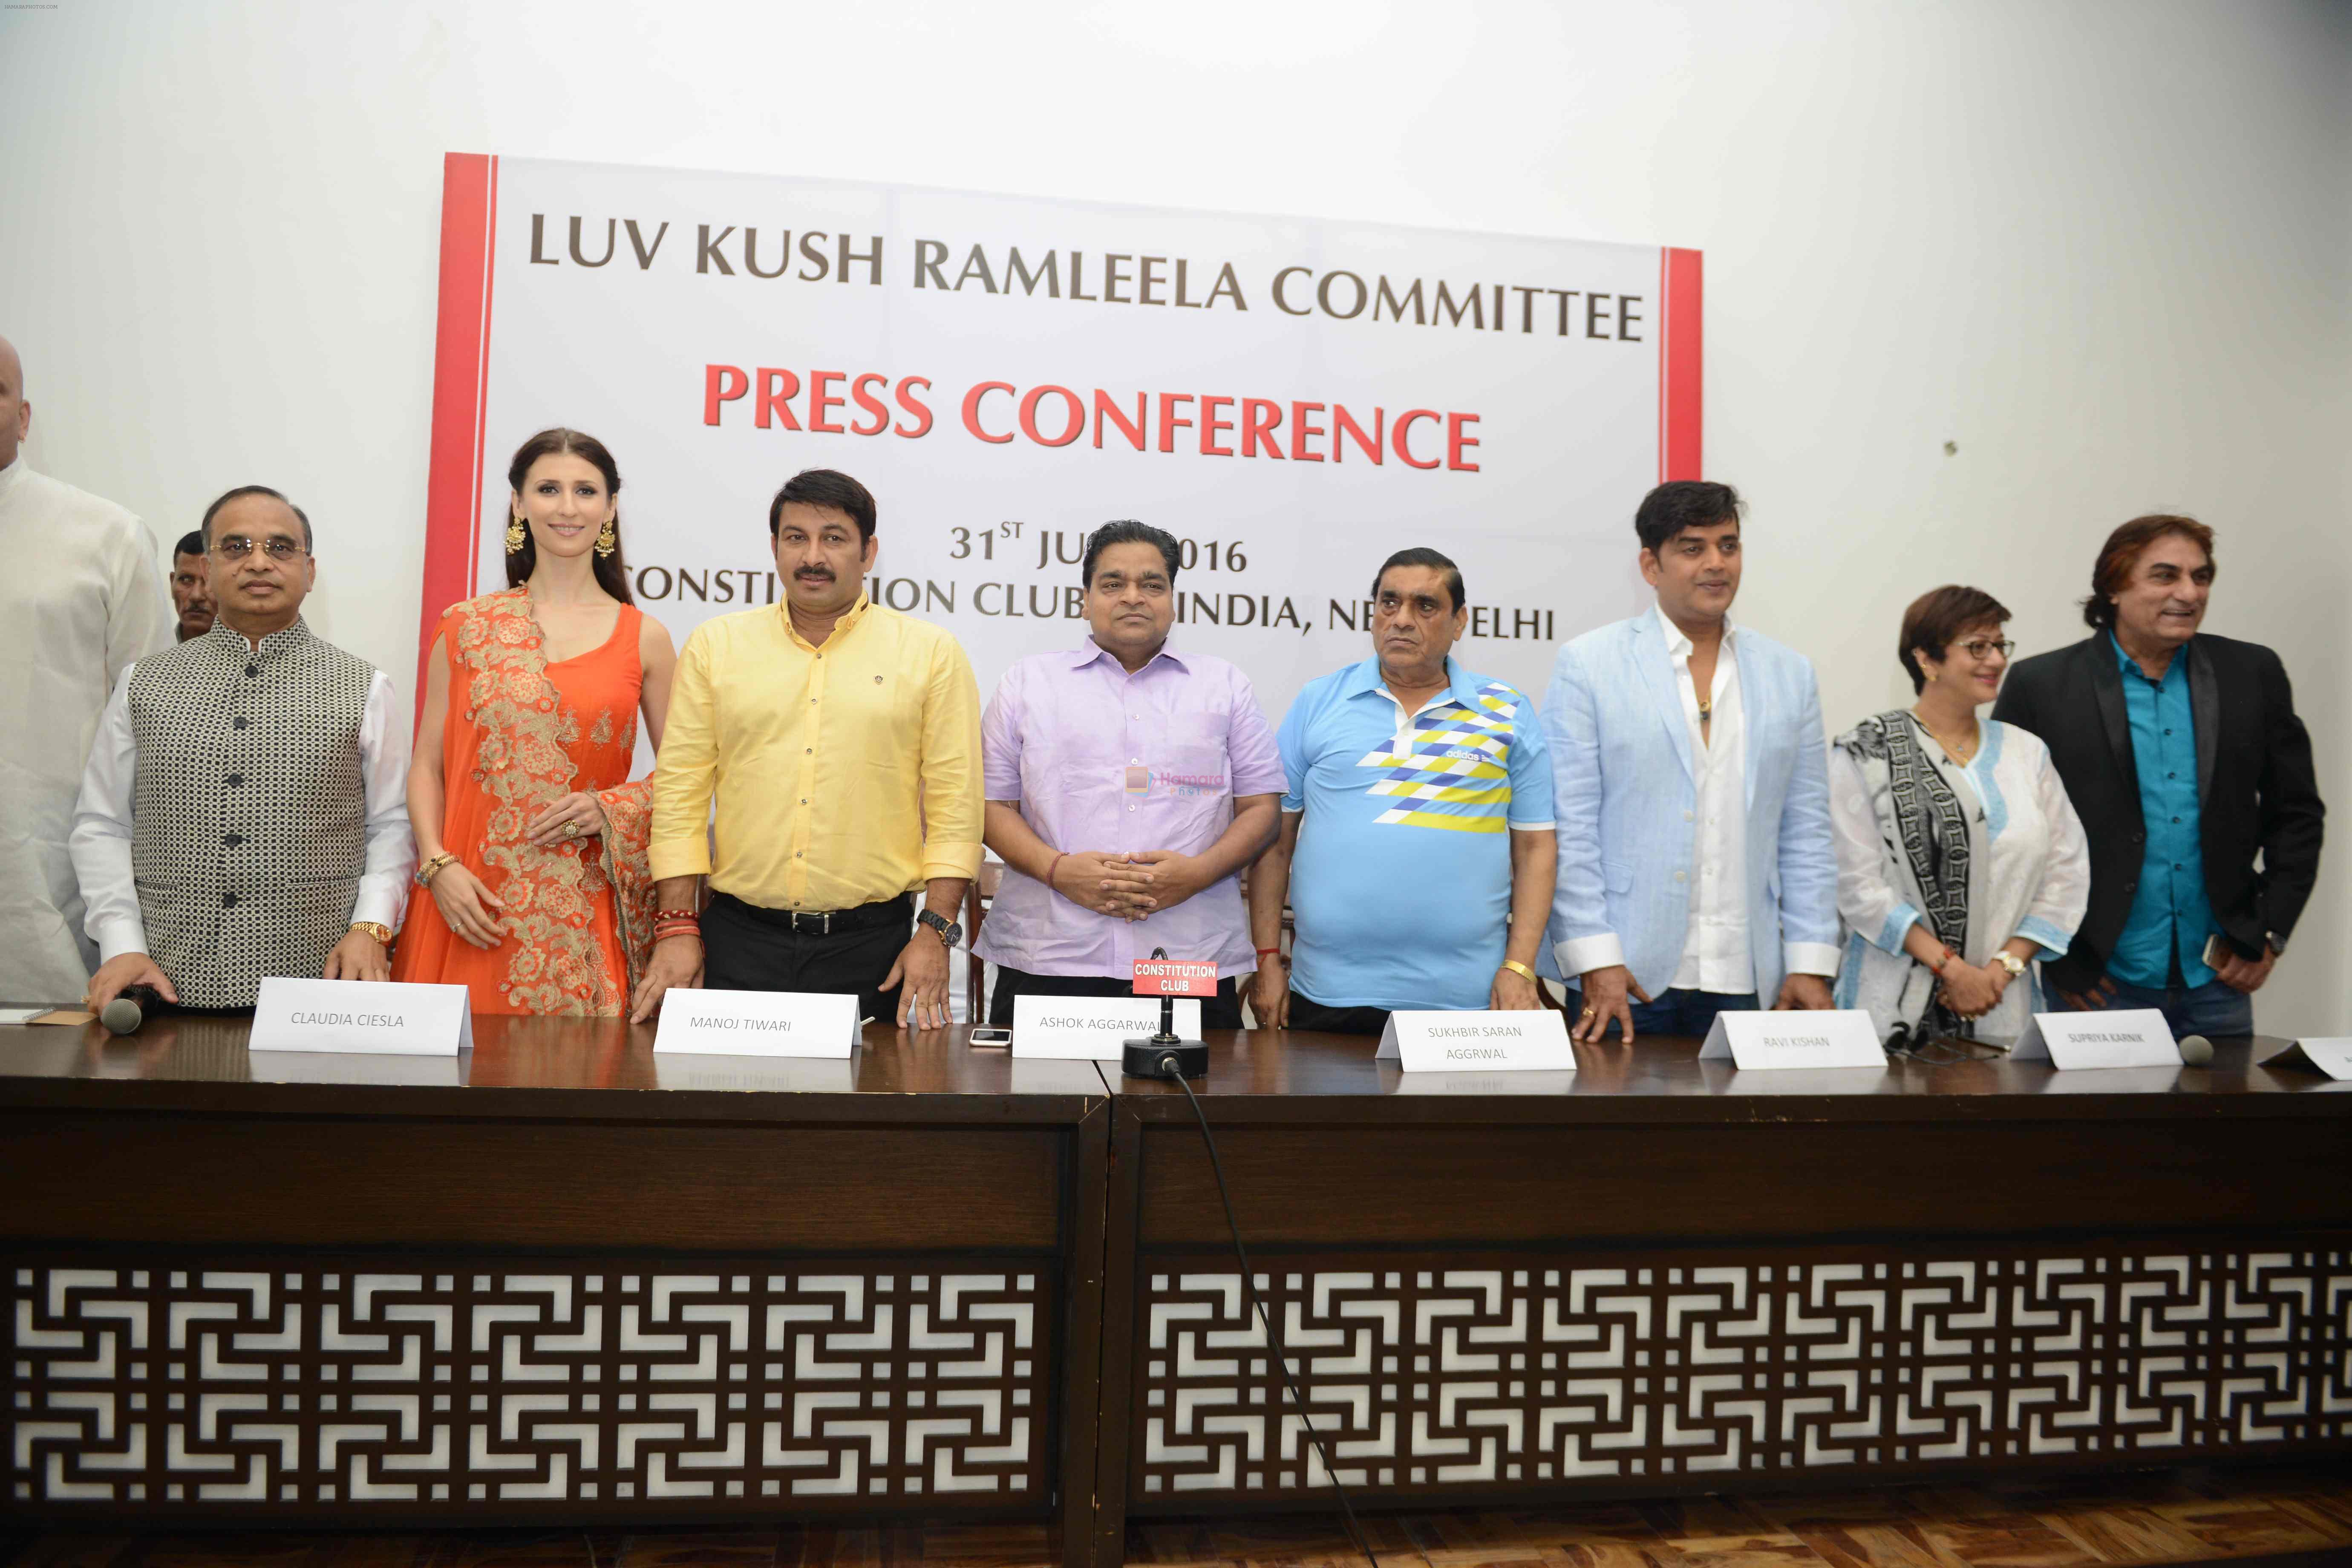 Claudia Ciesla, Manoj Tiwari, Ravi Kishan,Ali Khan during the Press confrence of Luv Kush biggest Ram Leela at Constitutional Club, Rafi Marg in New Delhi on 31st July 2016